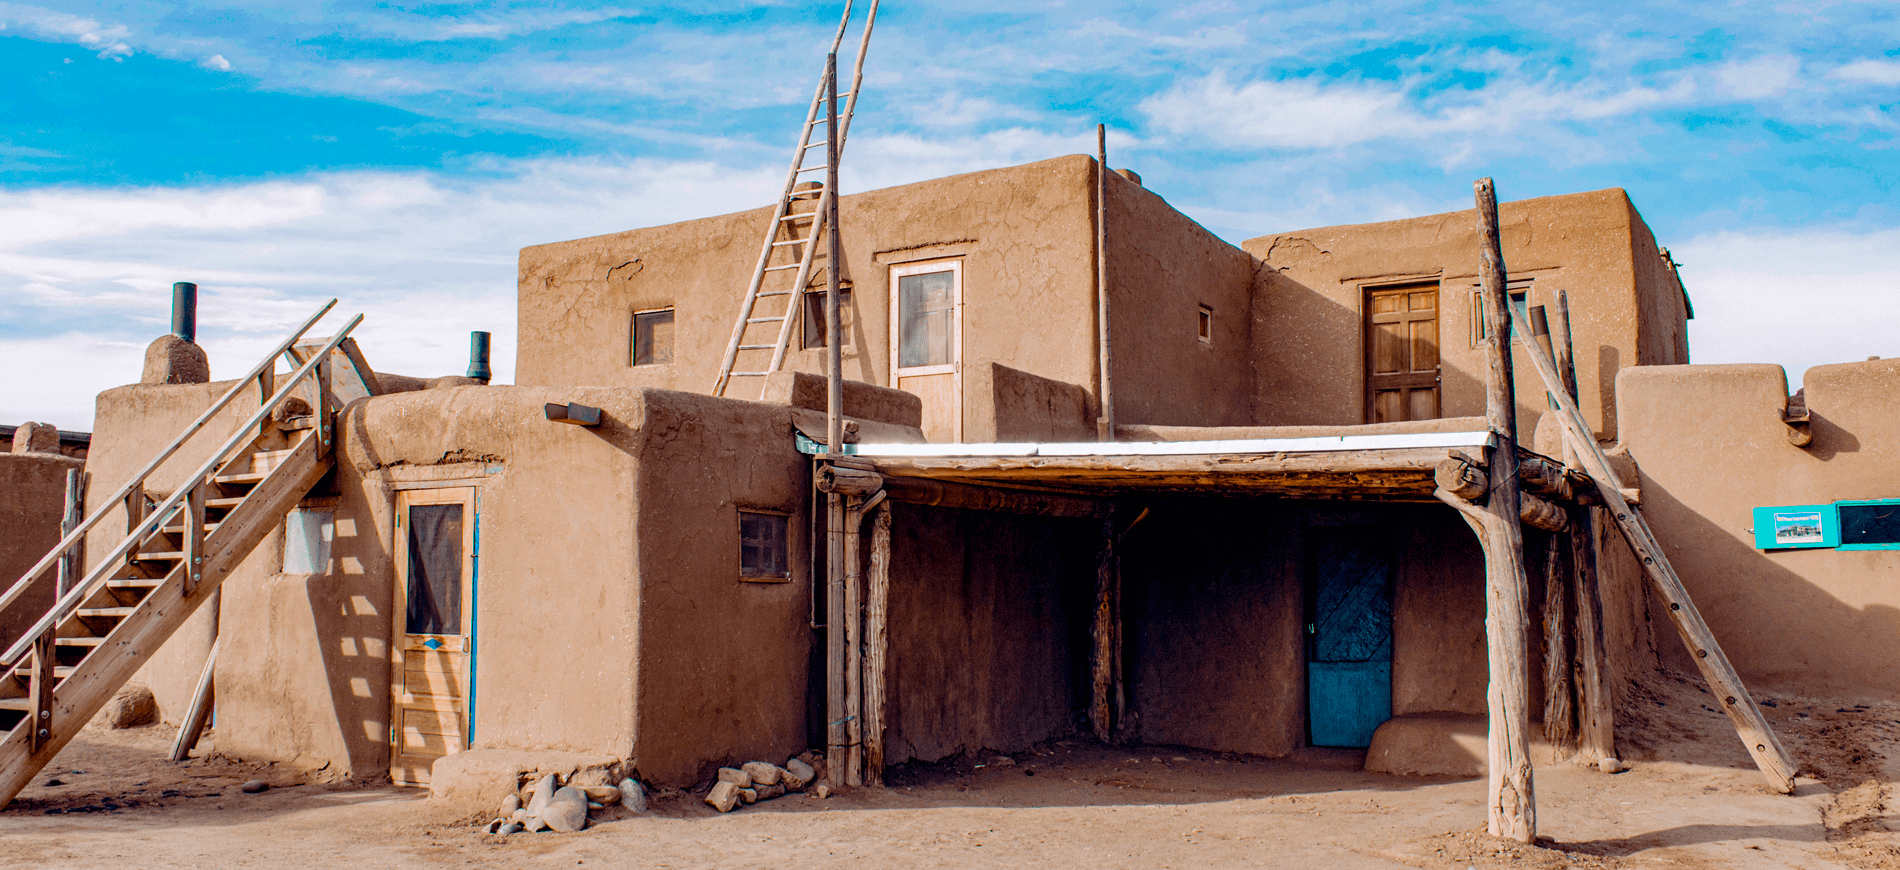 A multi-story Taos Pueblo habitation